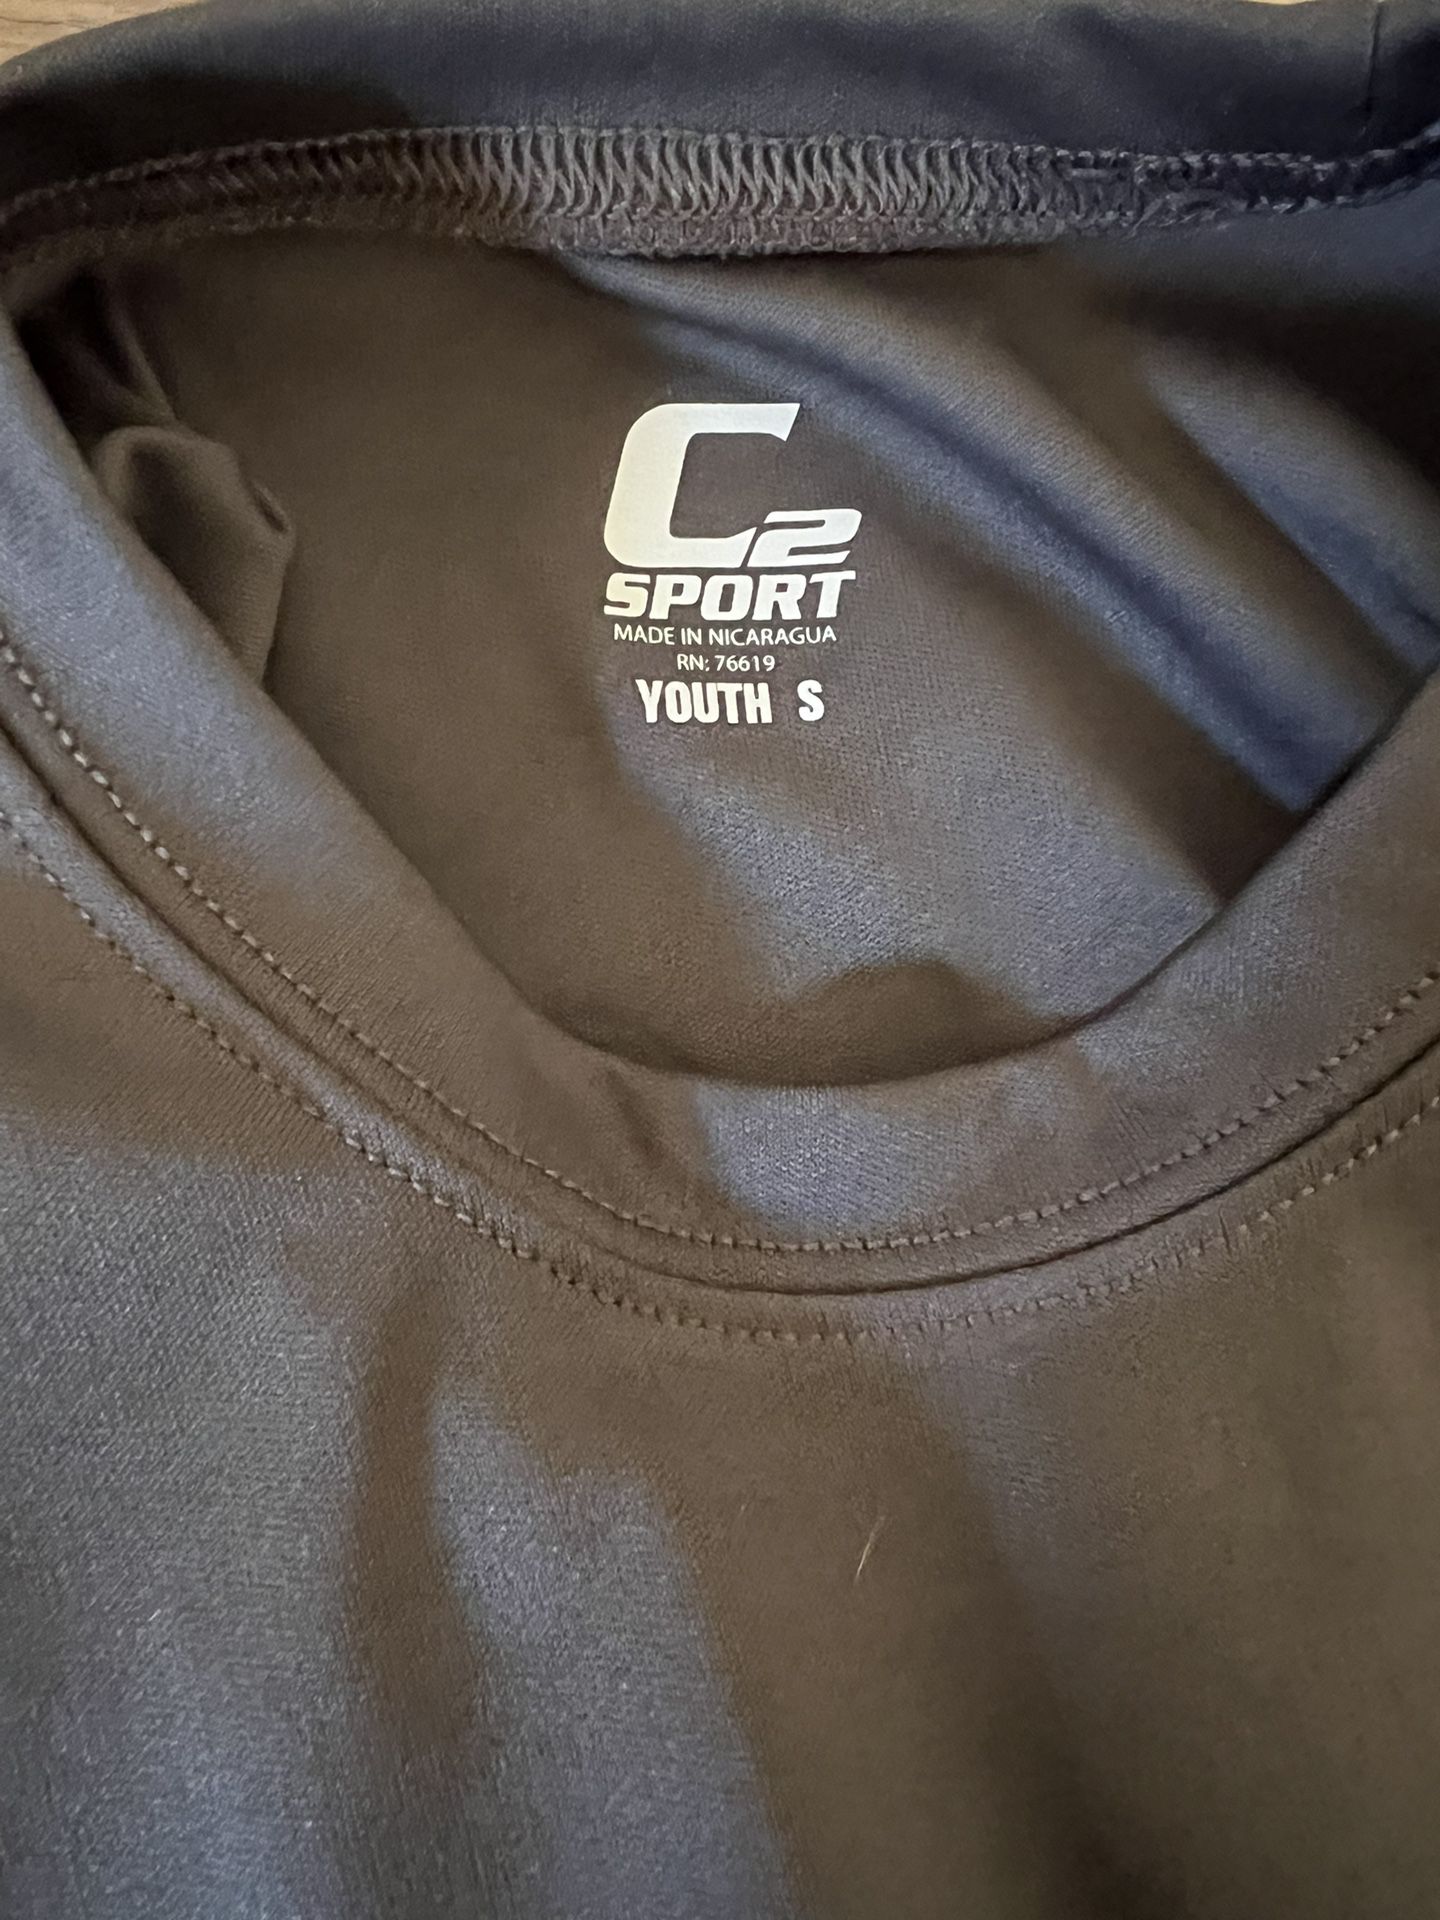 C2 Sport Youth Boys Size Small Shirt J-49